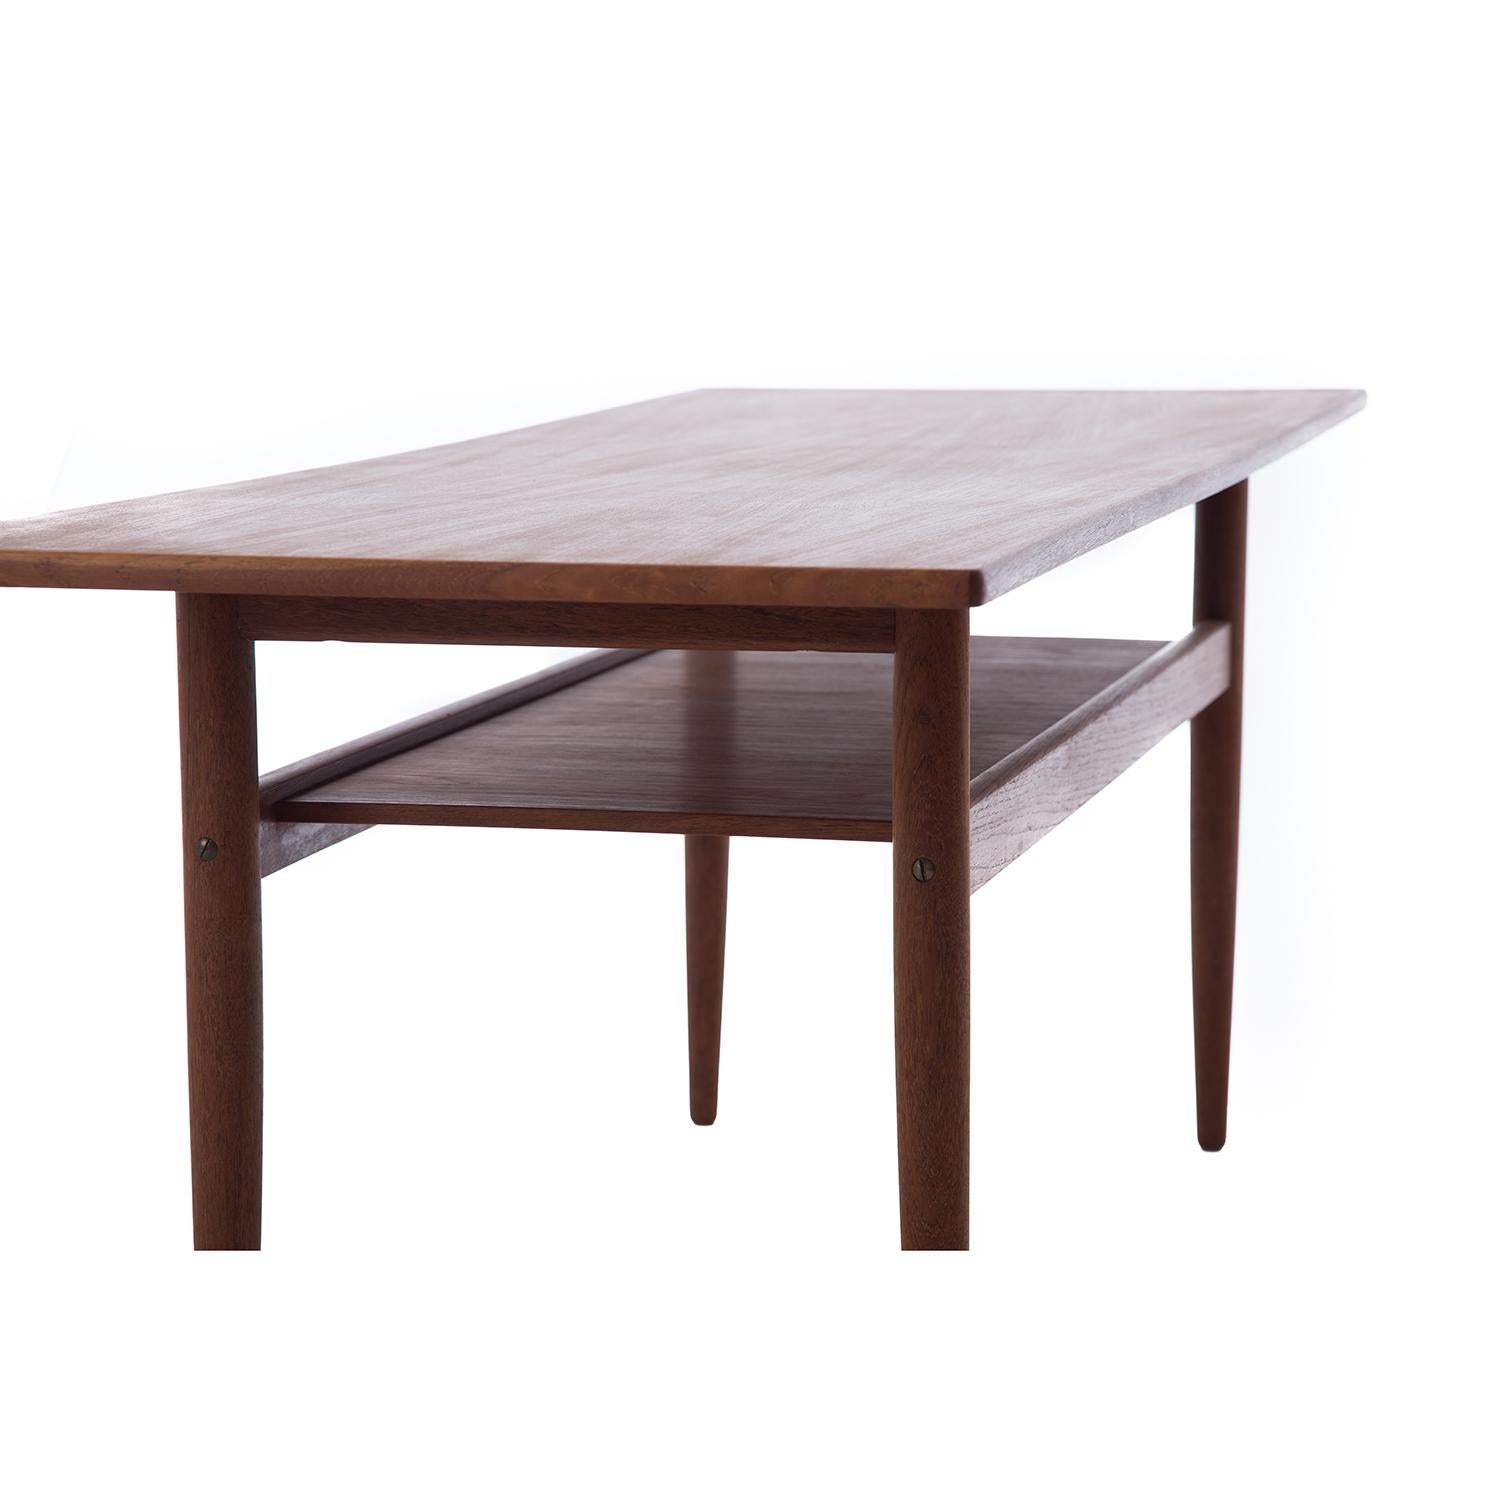 20th Century Scandinavian Modern Teak Coffee Table with Turned Legs & Solid Shelf